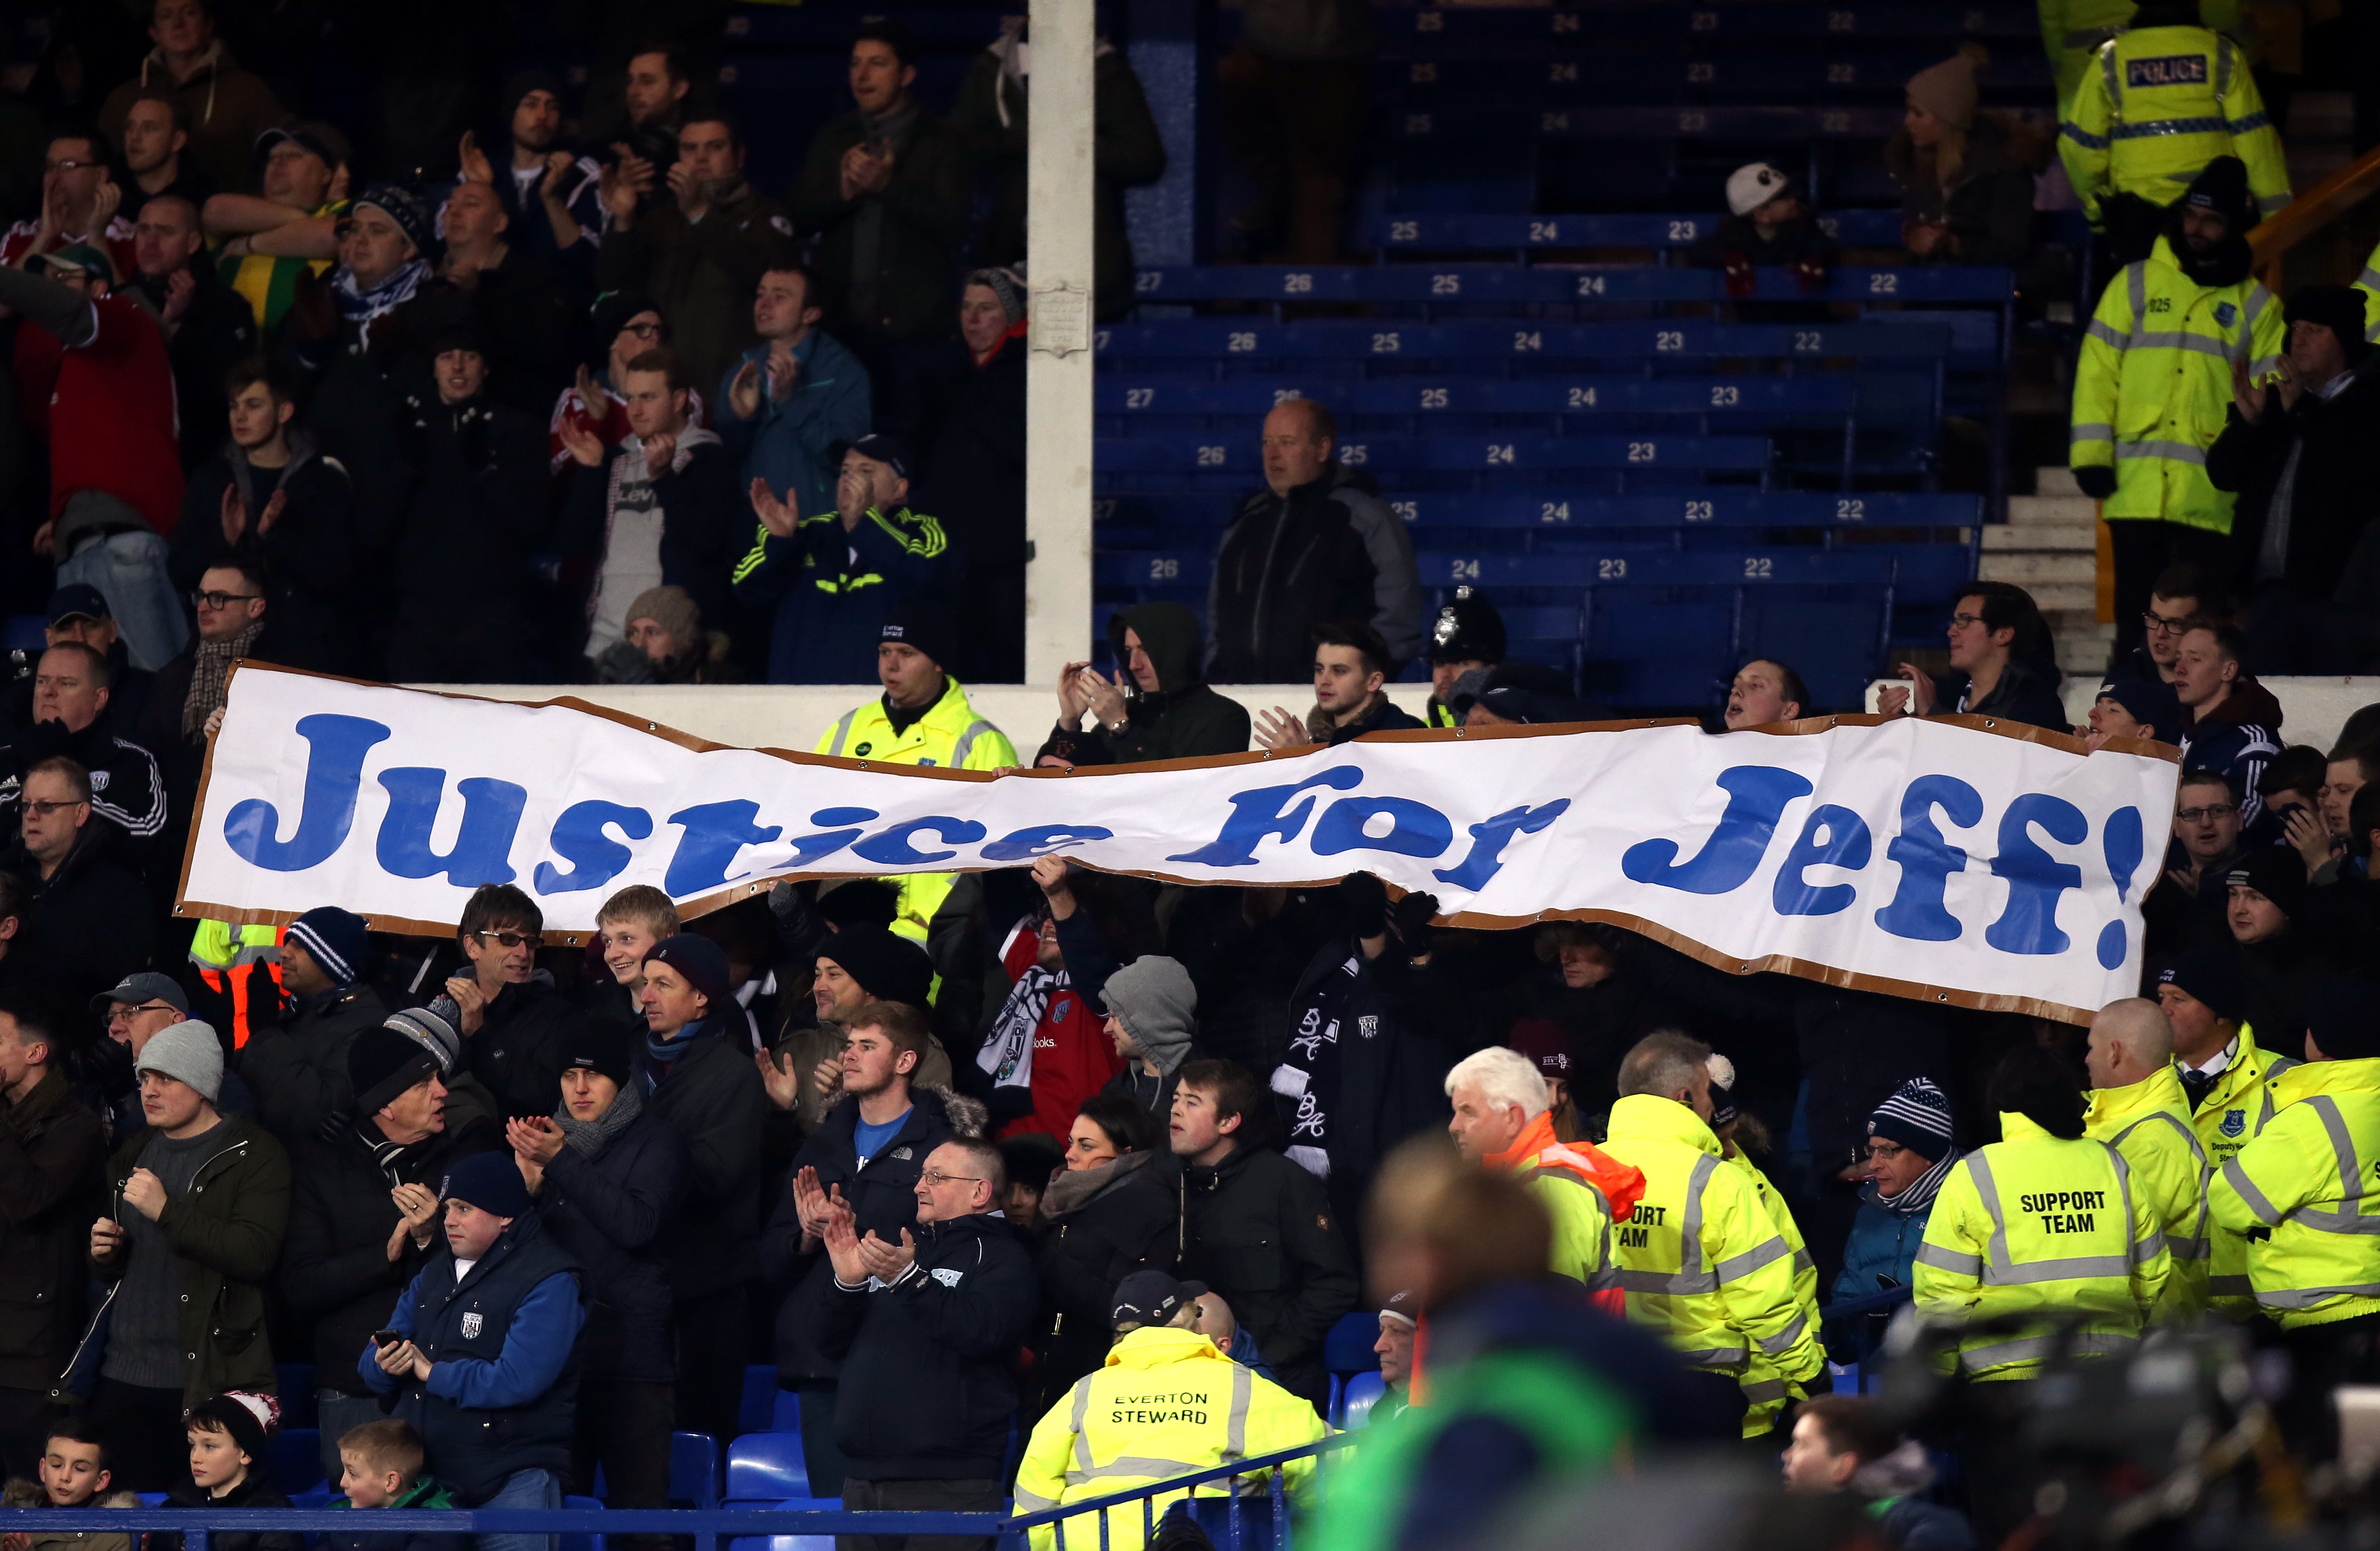 West Brom fans hold aloft a ‘Justice for Jeff’ banner (Peter Byrne/PA)